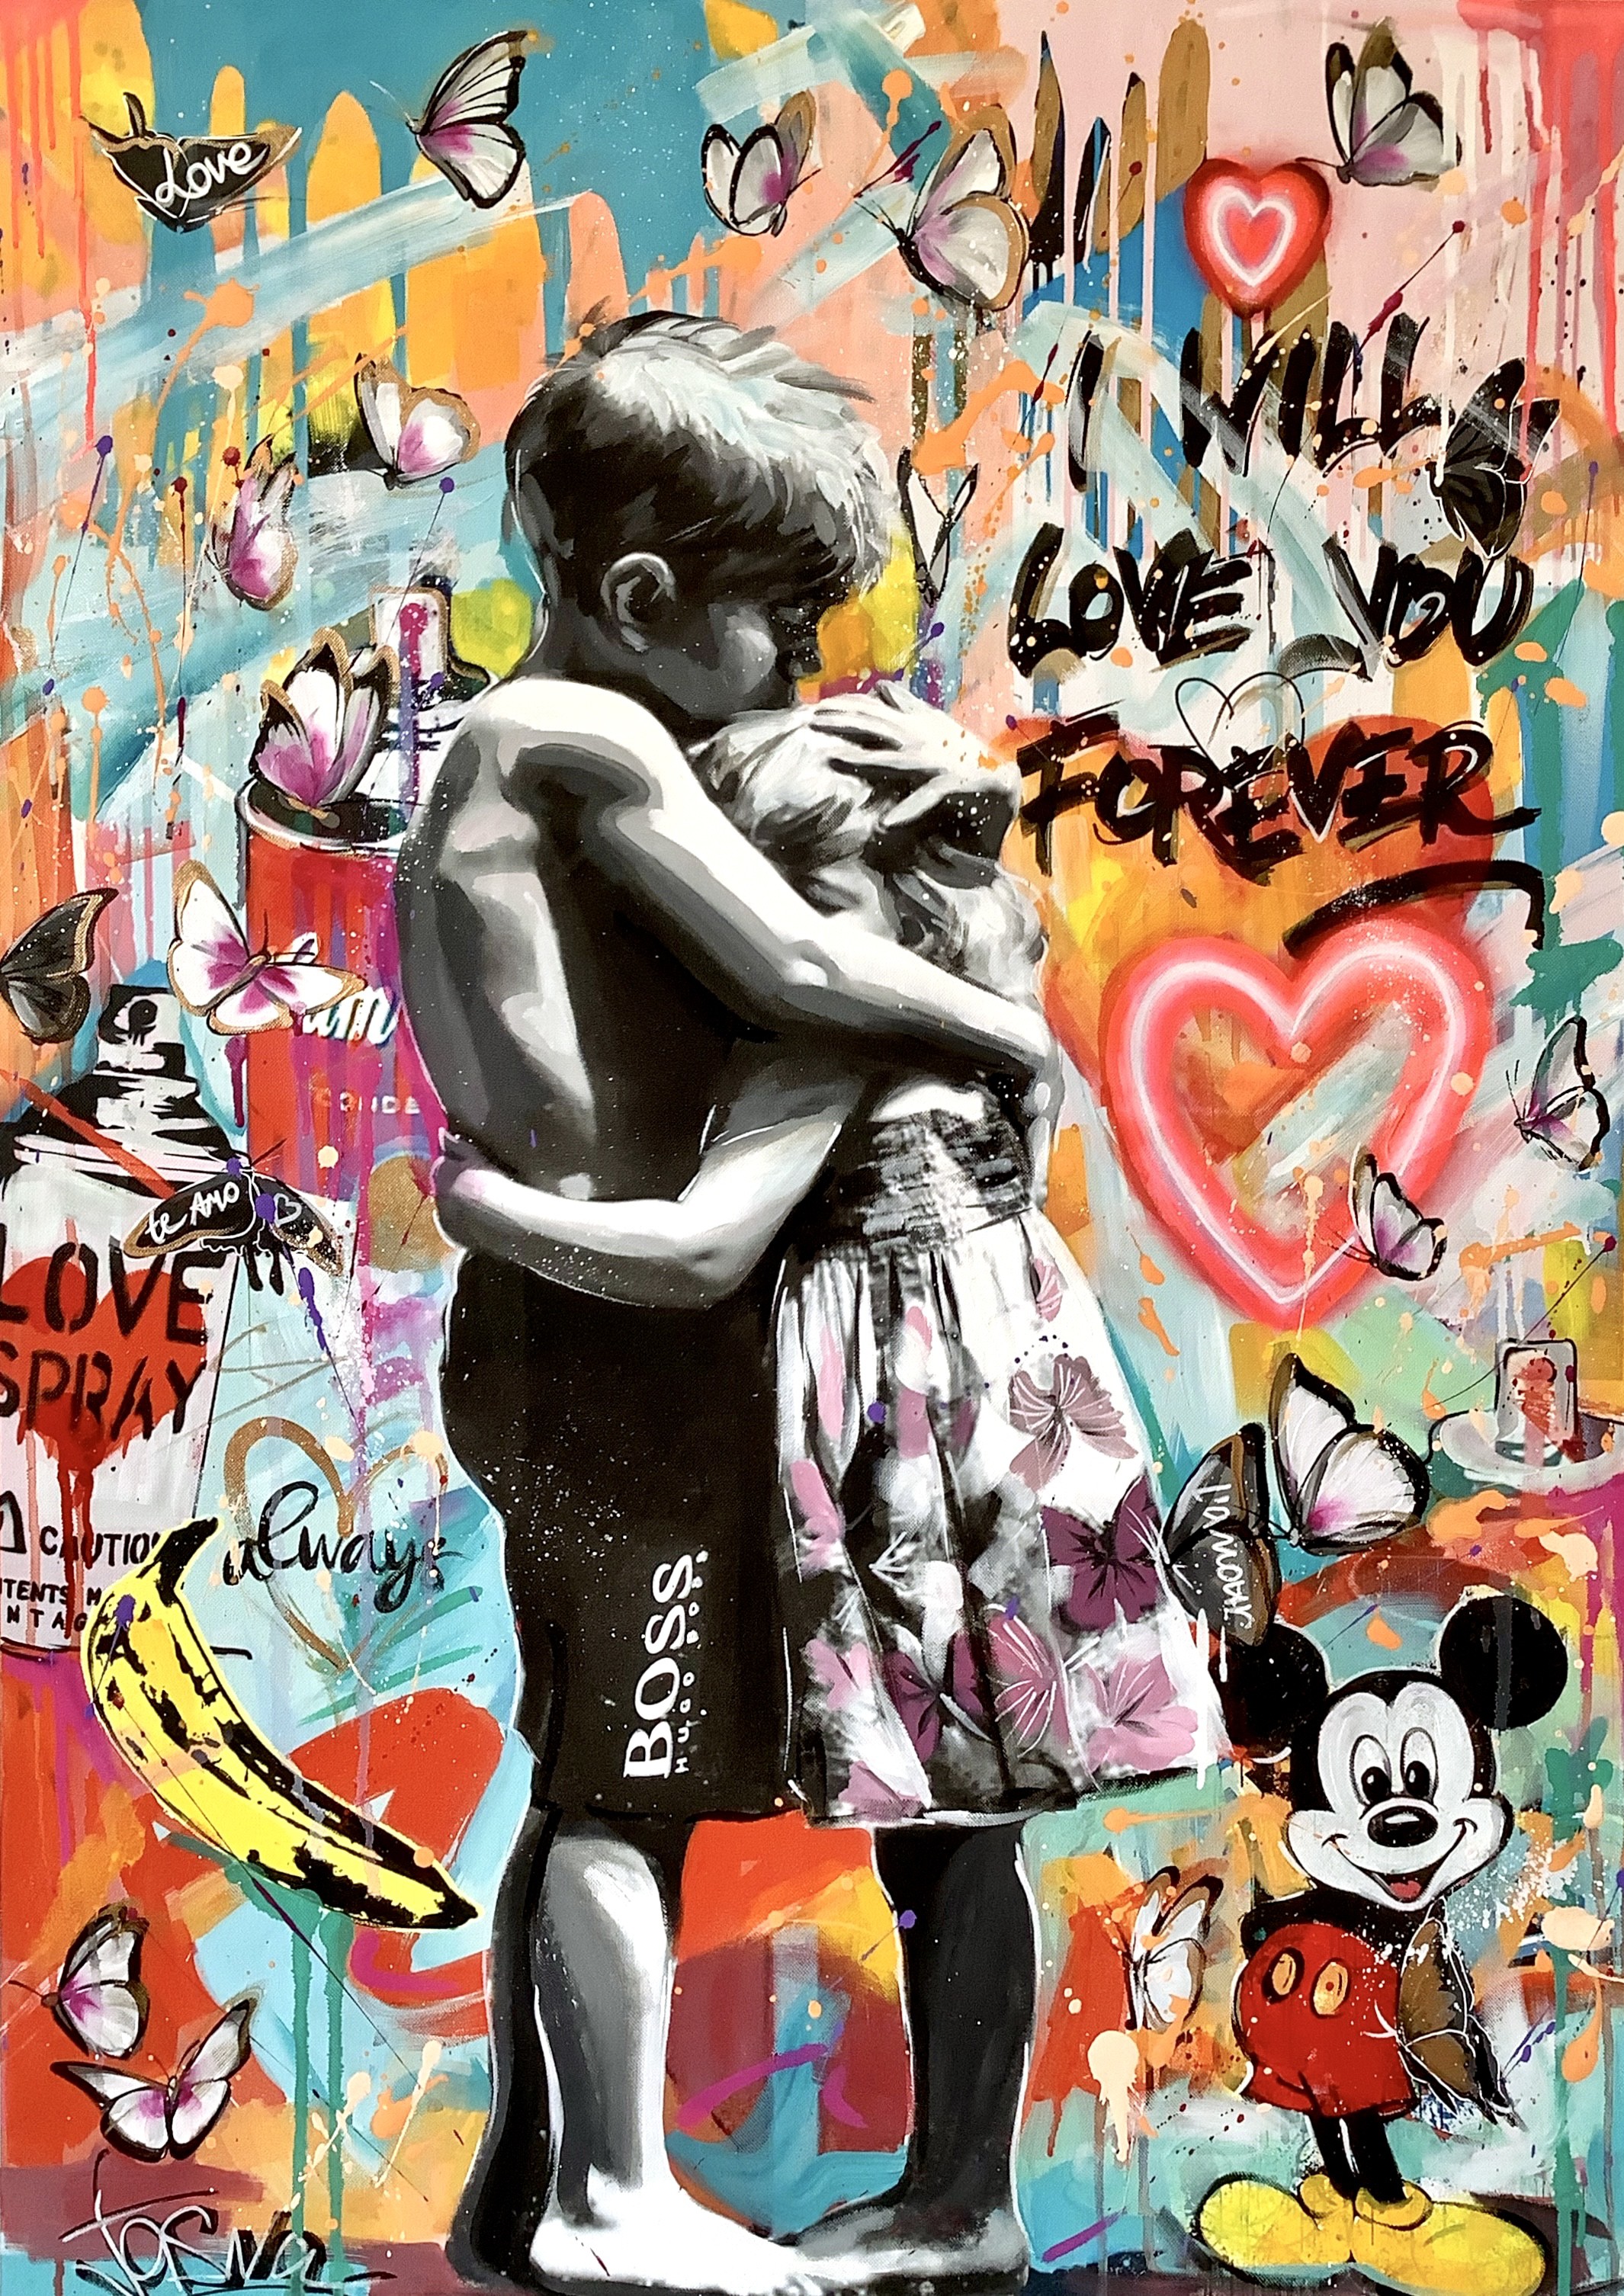 Tableau Street Art Graffiti I Will Love You Forever